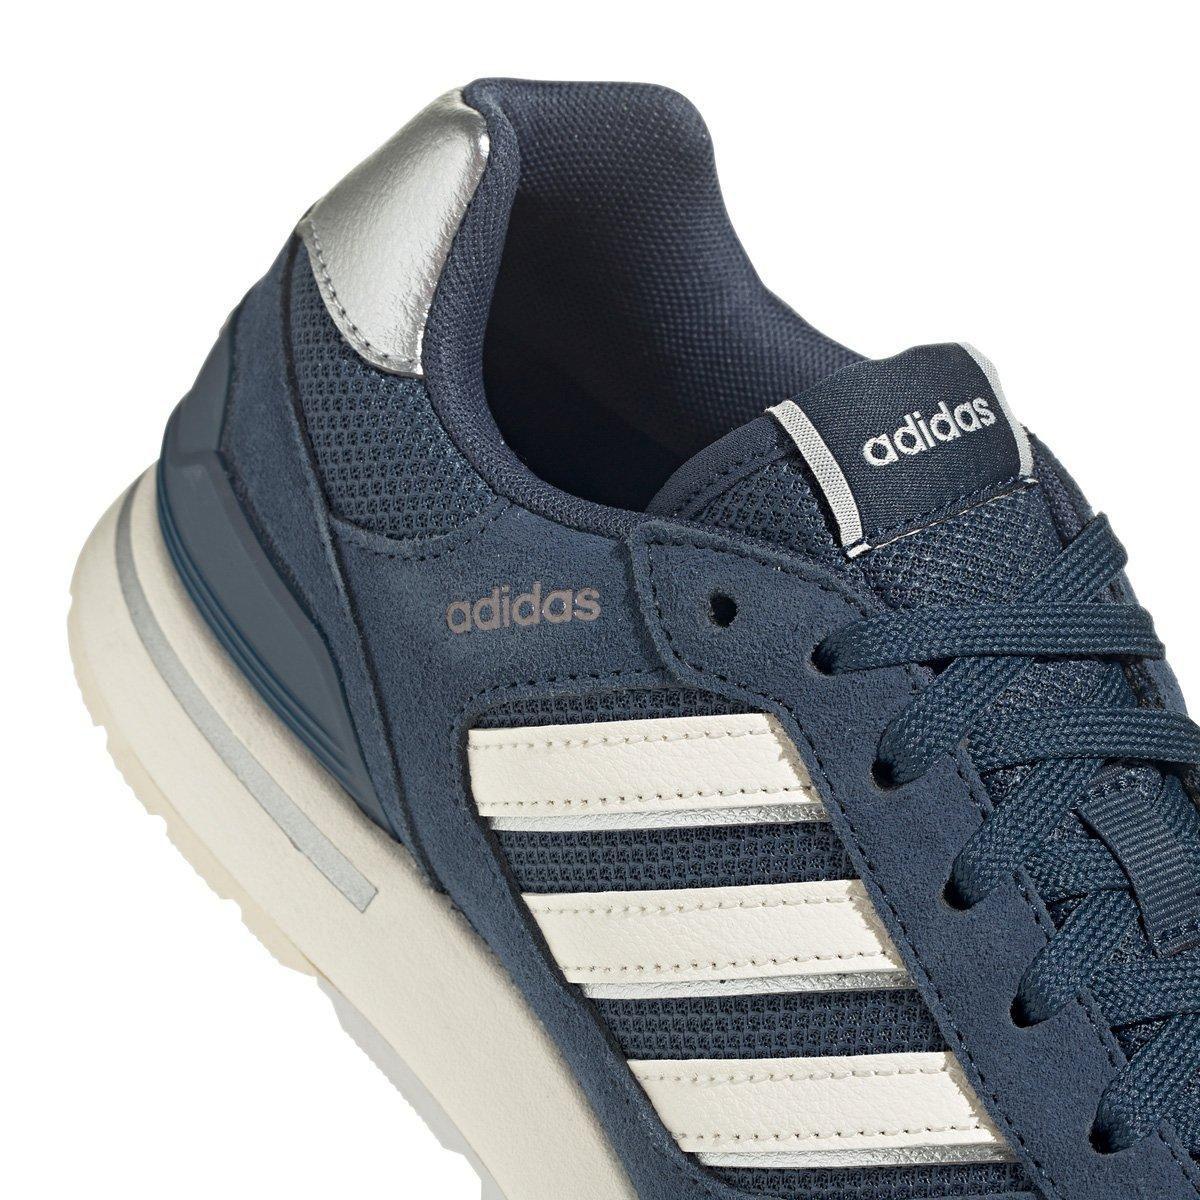 Adidas run 80s